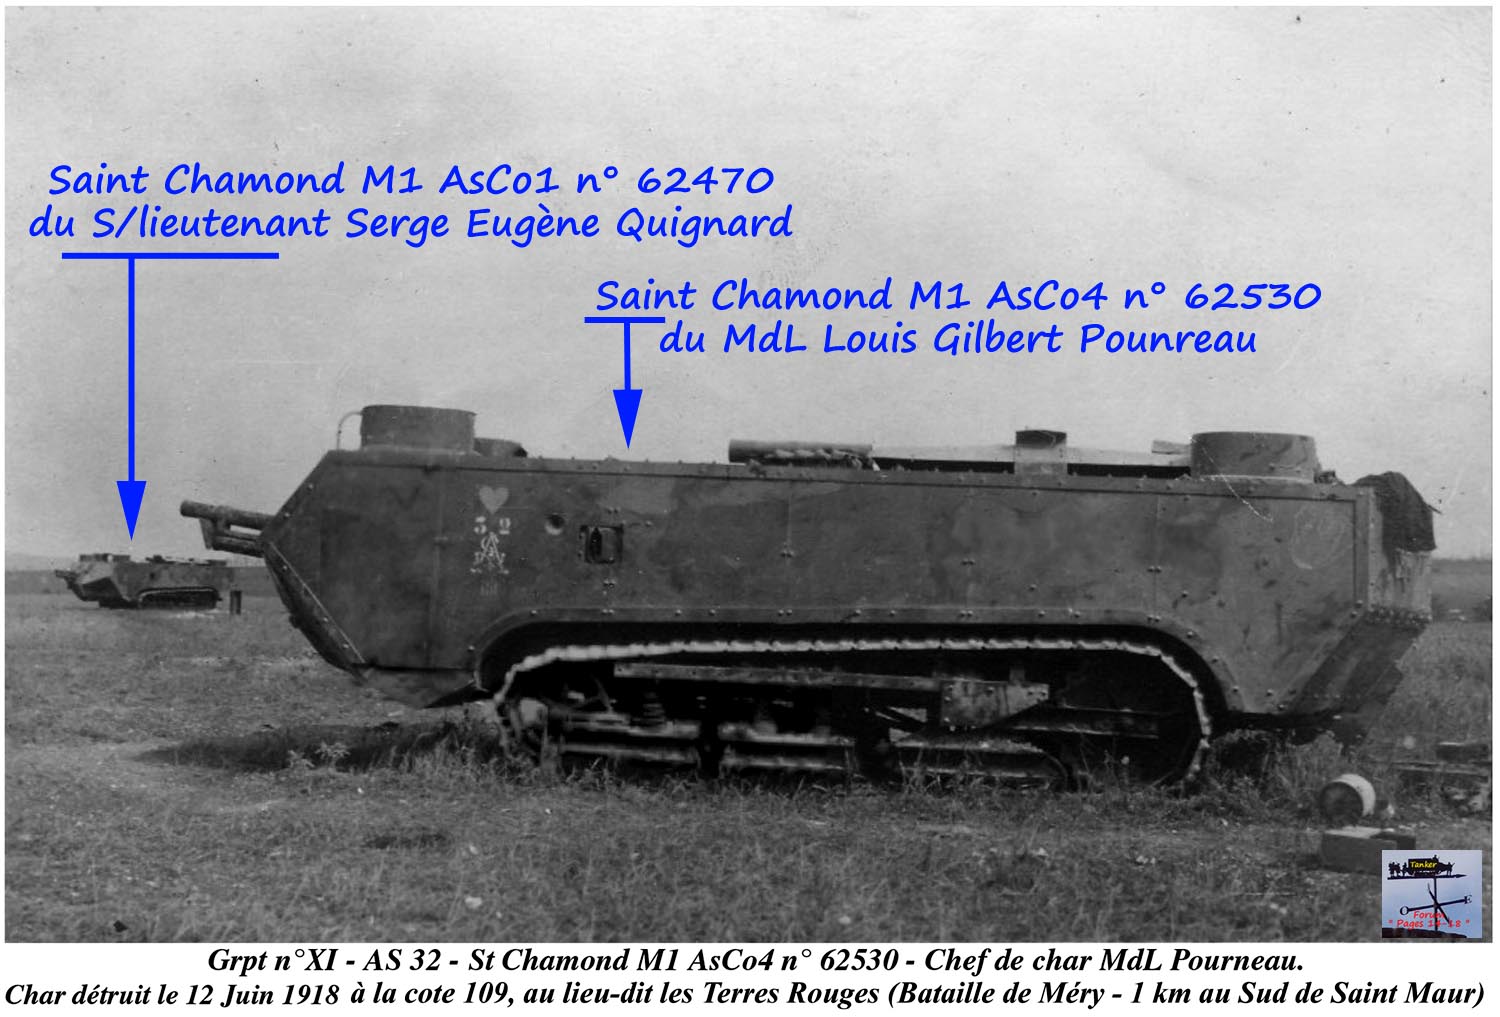 AS 32 - St Chamond M1 AsCo4 n° 62530 (08a1).jpg